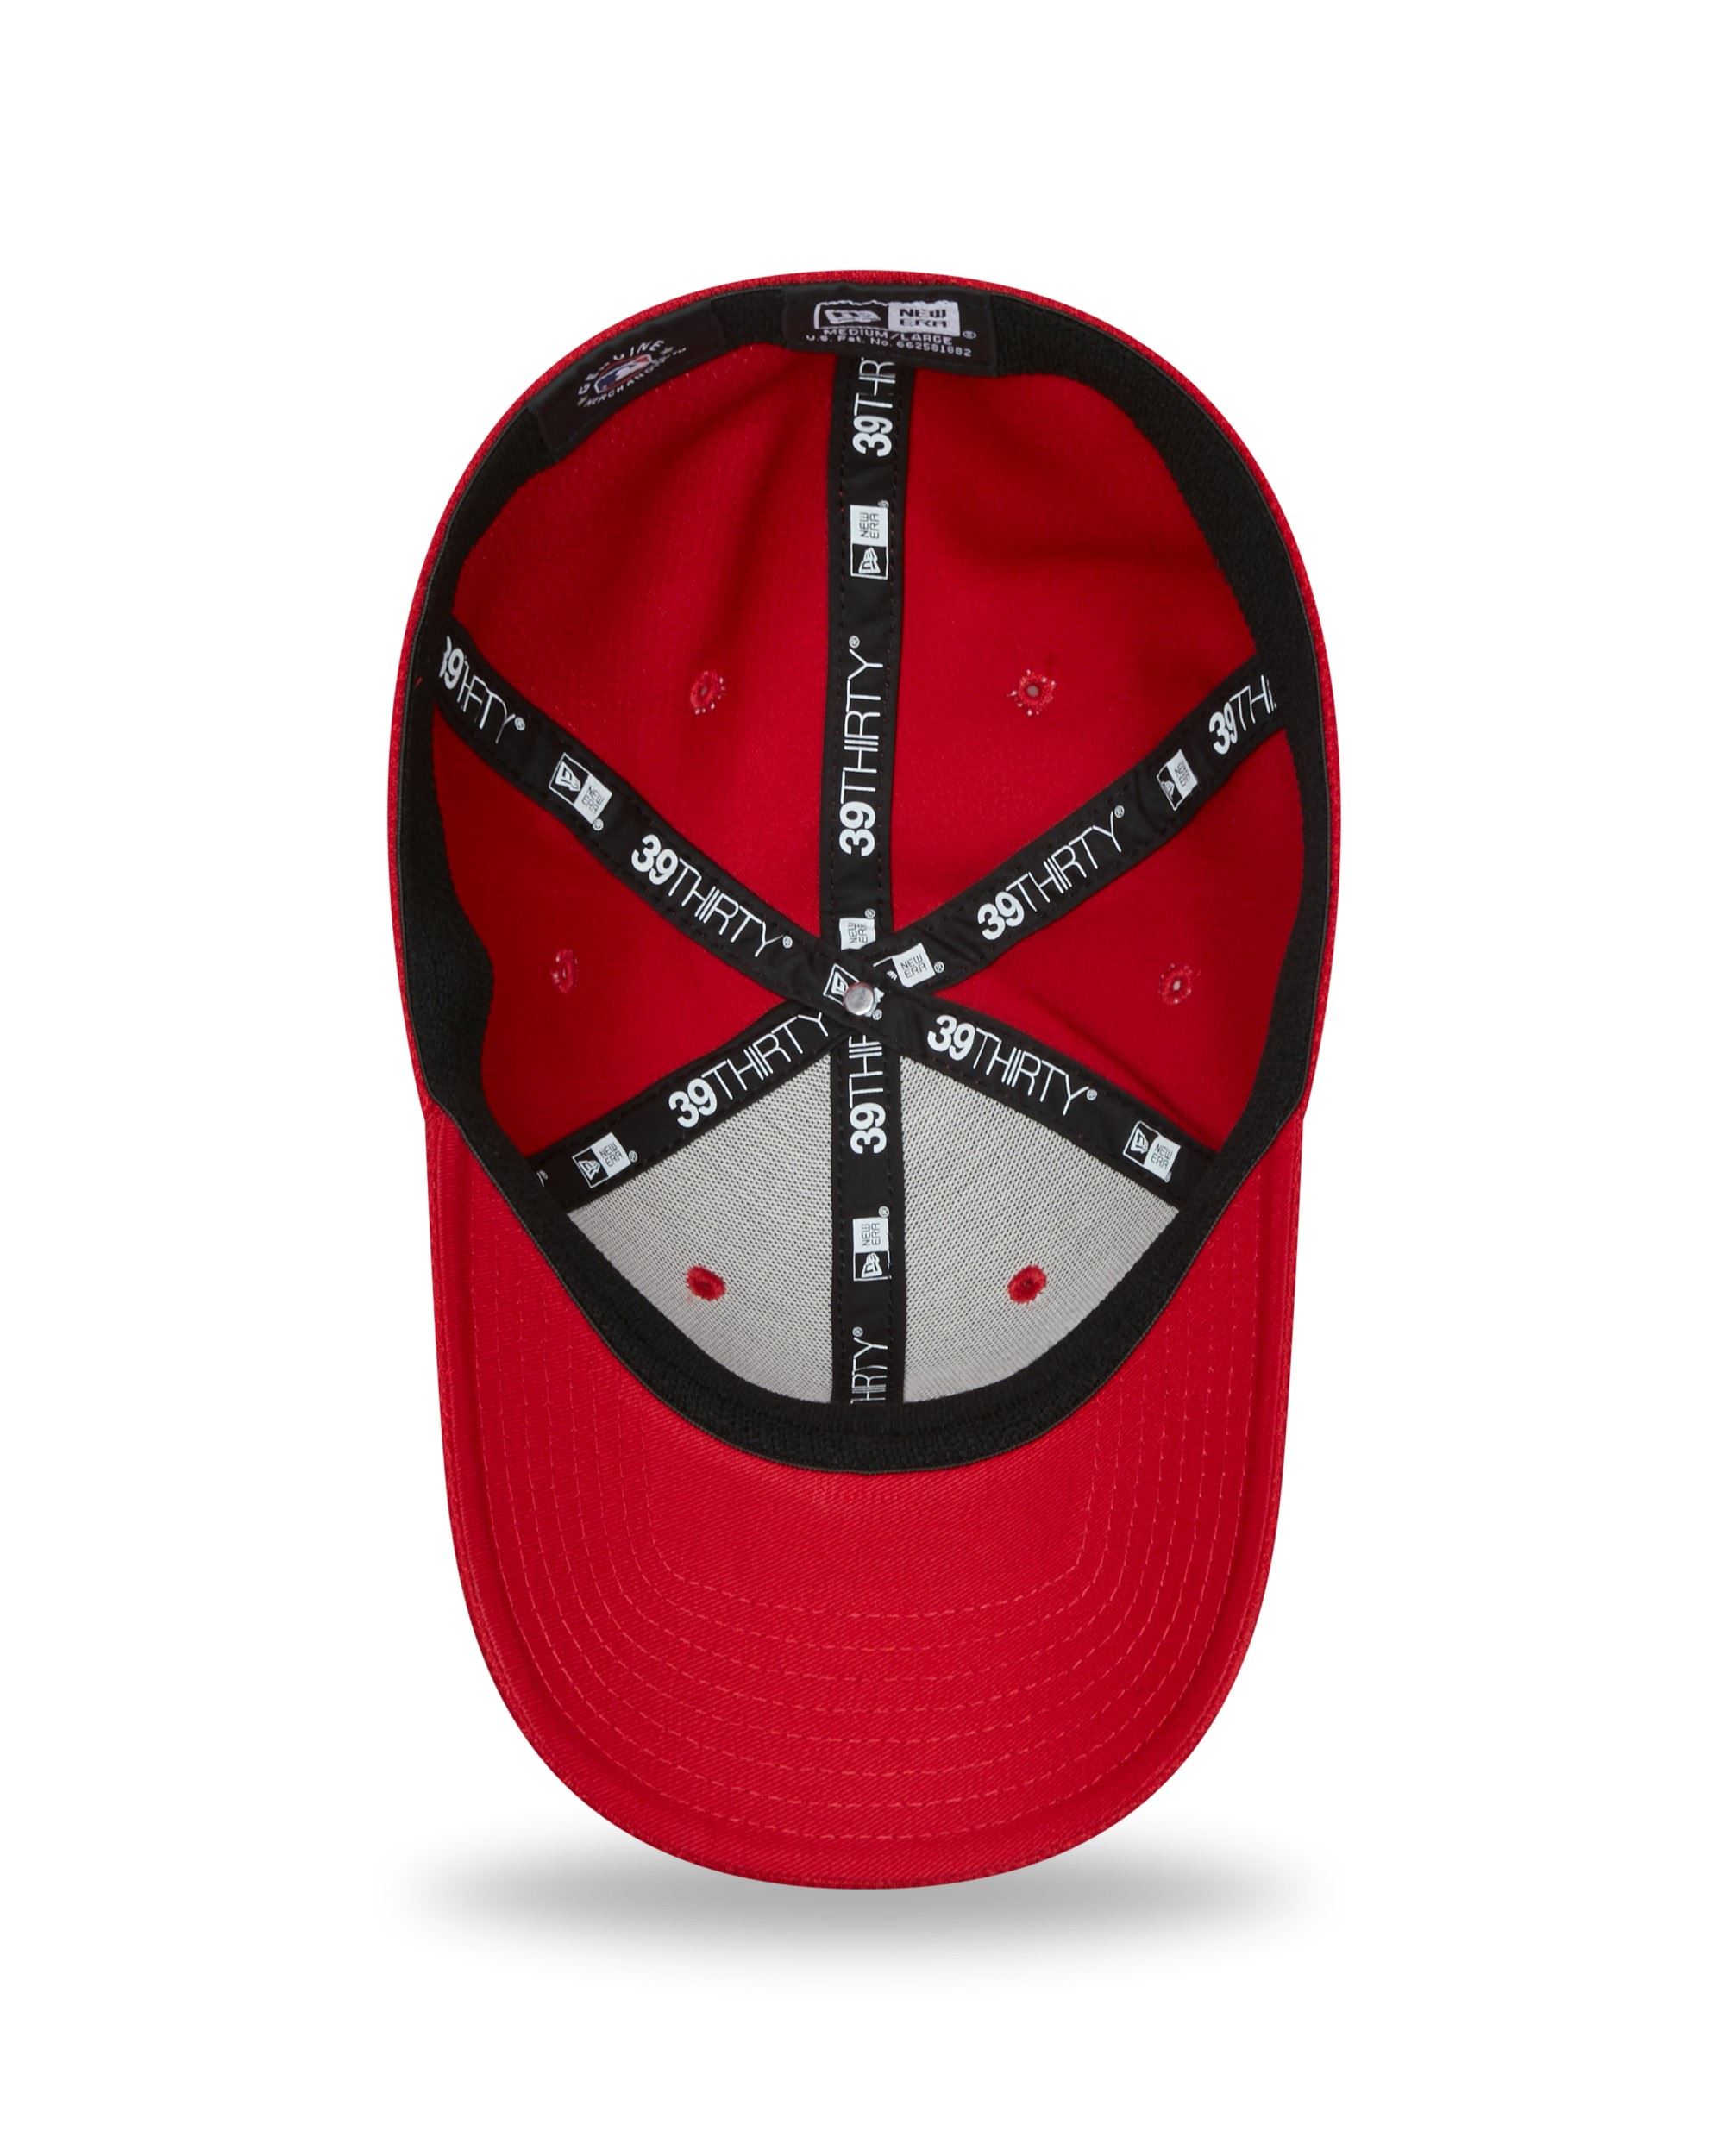 Boston Red Sox MLB Diamond Era Scarlet 39Thirty Stretch Cap New Era